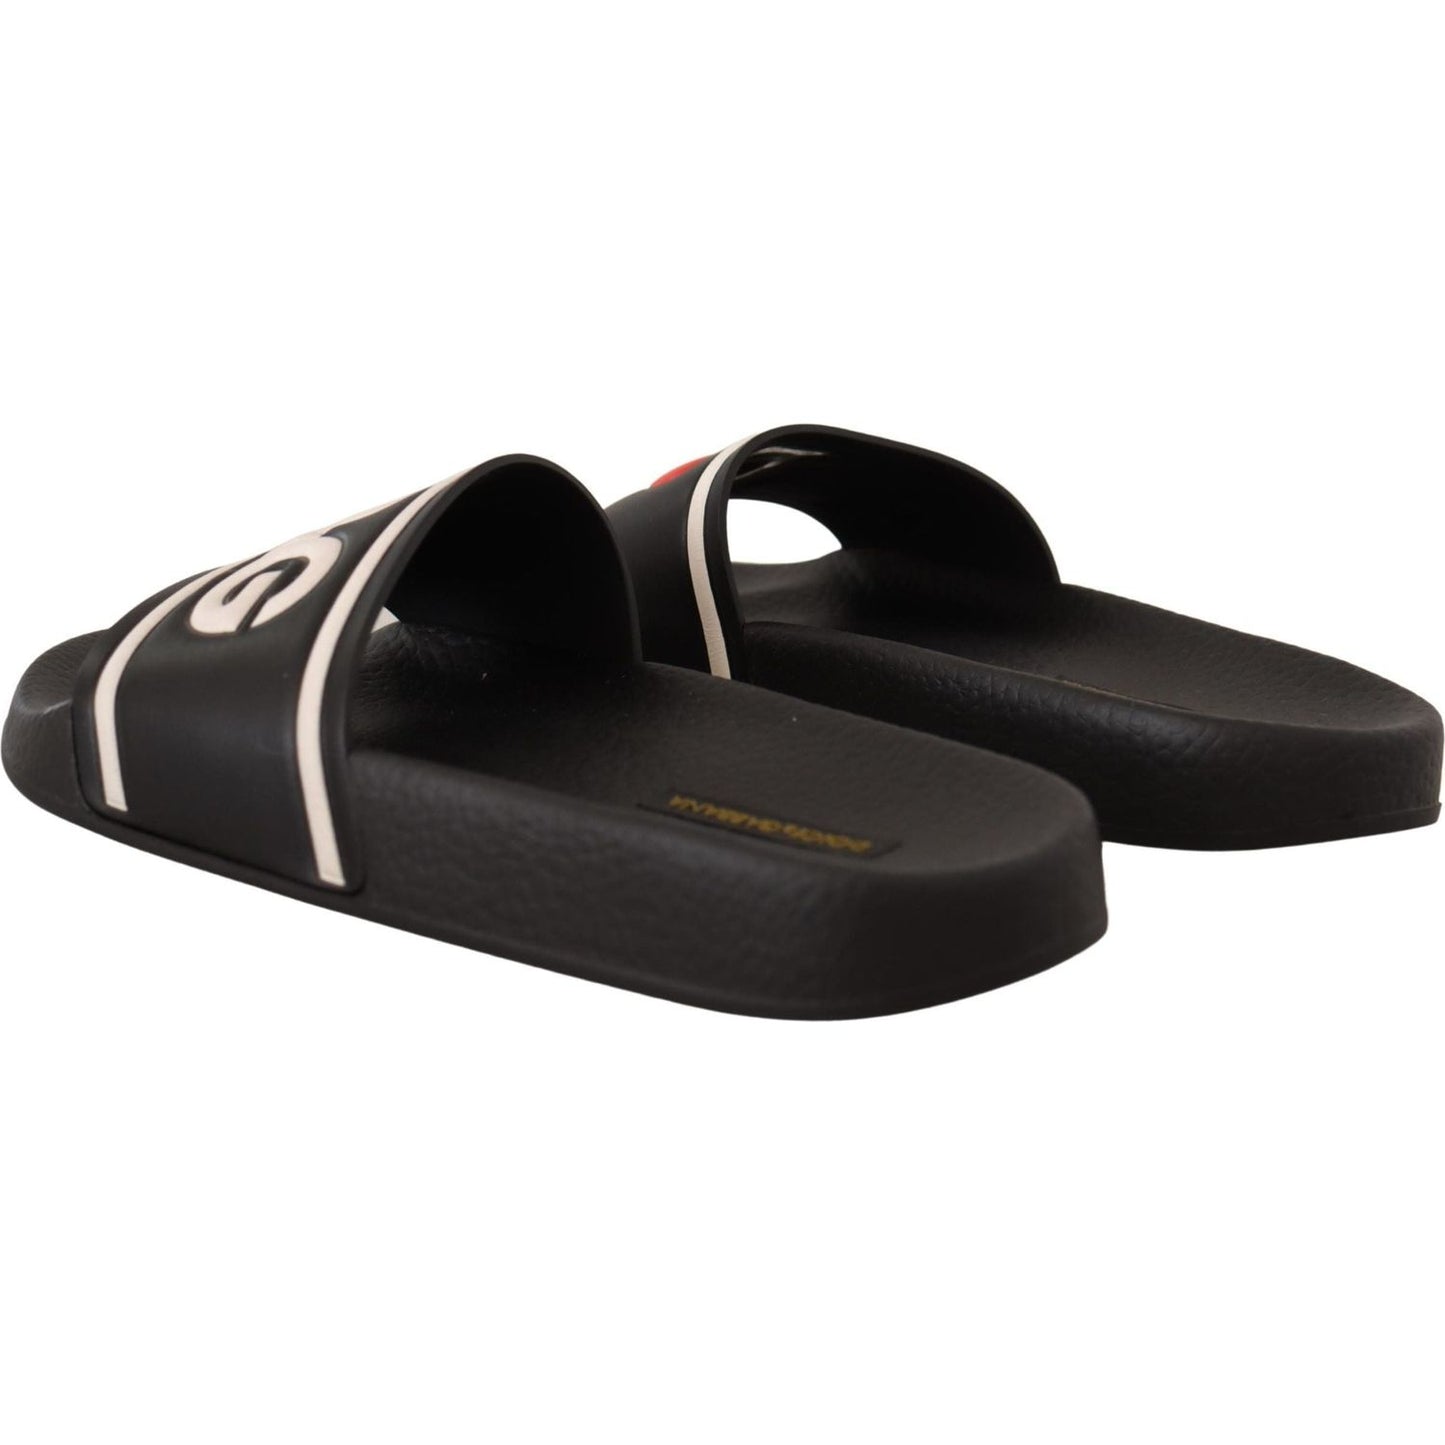 Dolce & Gabbana Elegant Black Leather Slide Sandals for Her black-leather-i-love-d-g-slides-sandals